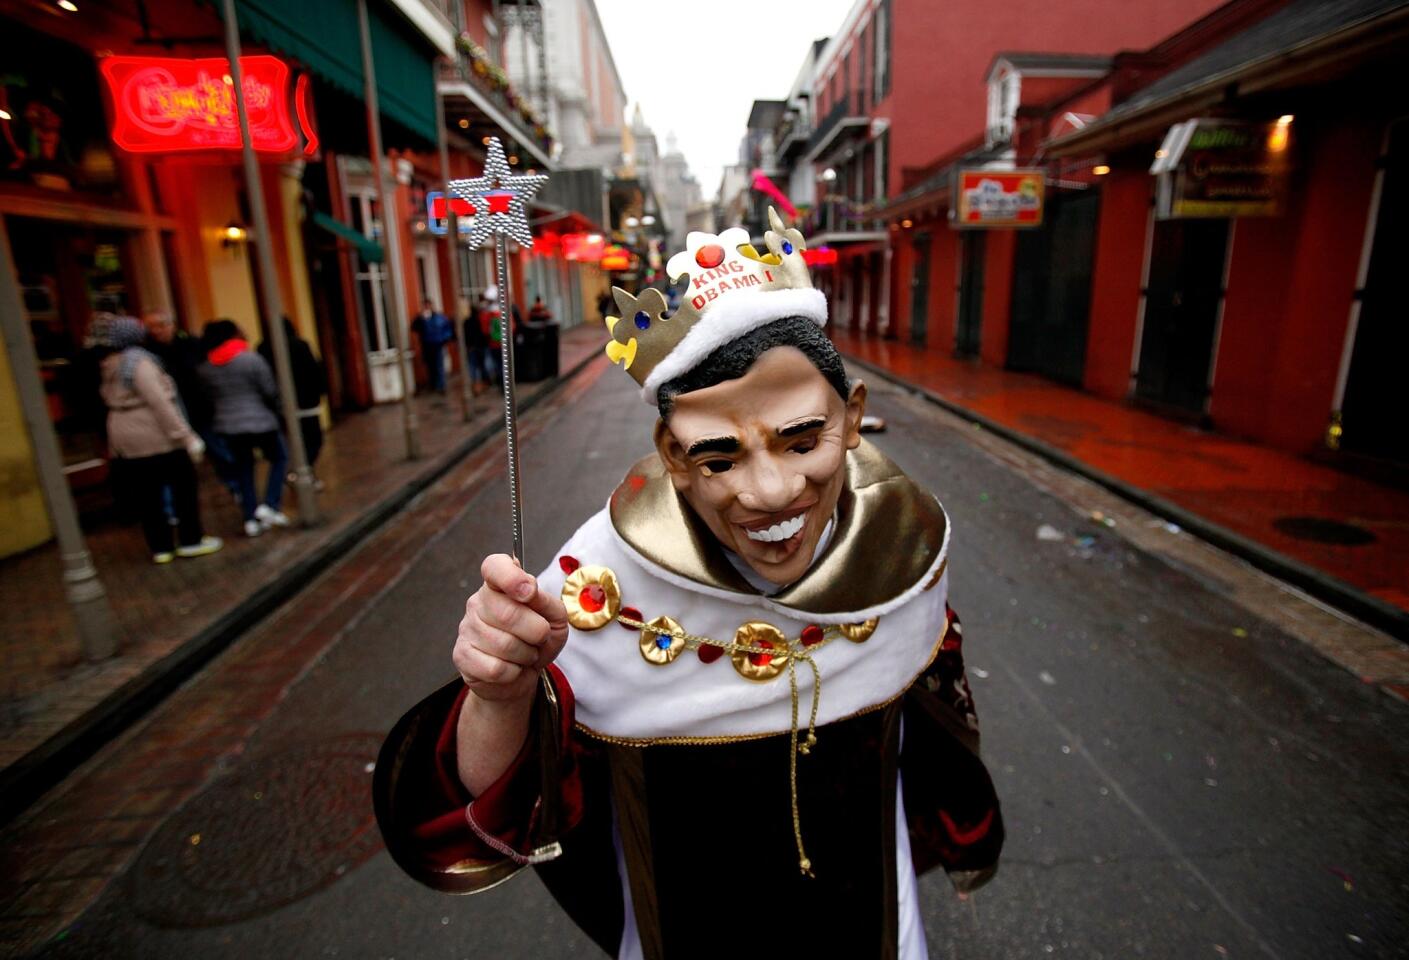 Mardi Gras celebrations in New Orleans